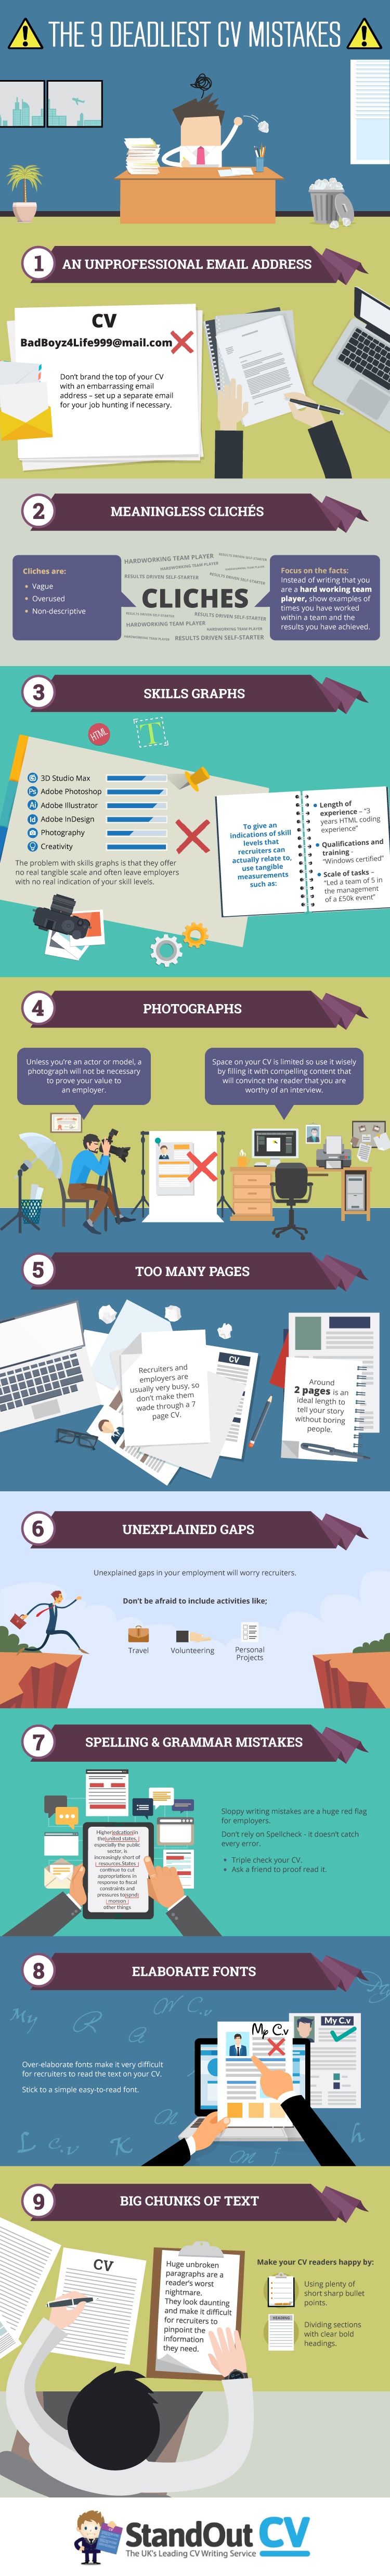 Infographic on resume advice for avoiding common CV mistakes